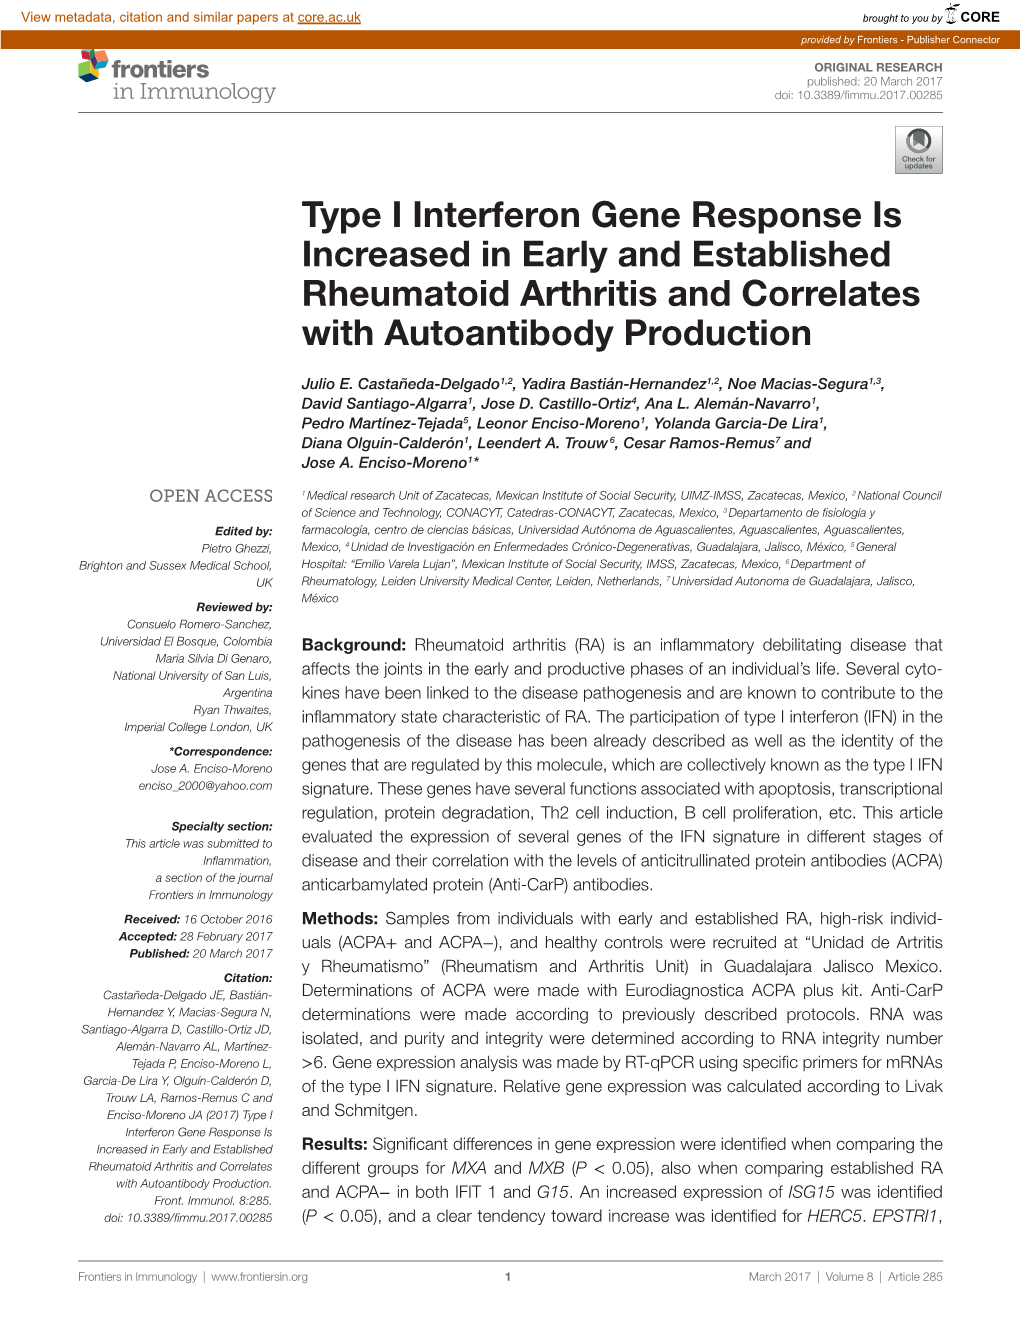 Type I Interferon Gene Response Is Increased in Early and Established Rheumatoid Arthritis and Correlates with Autoantibody Production